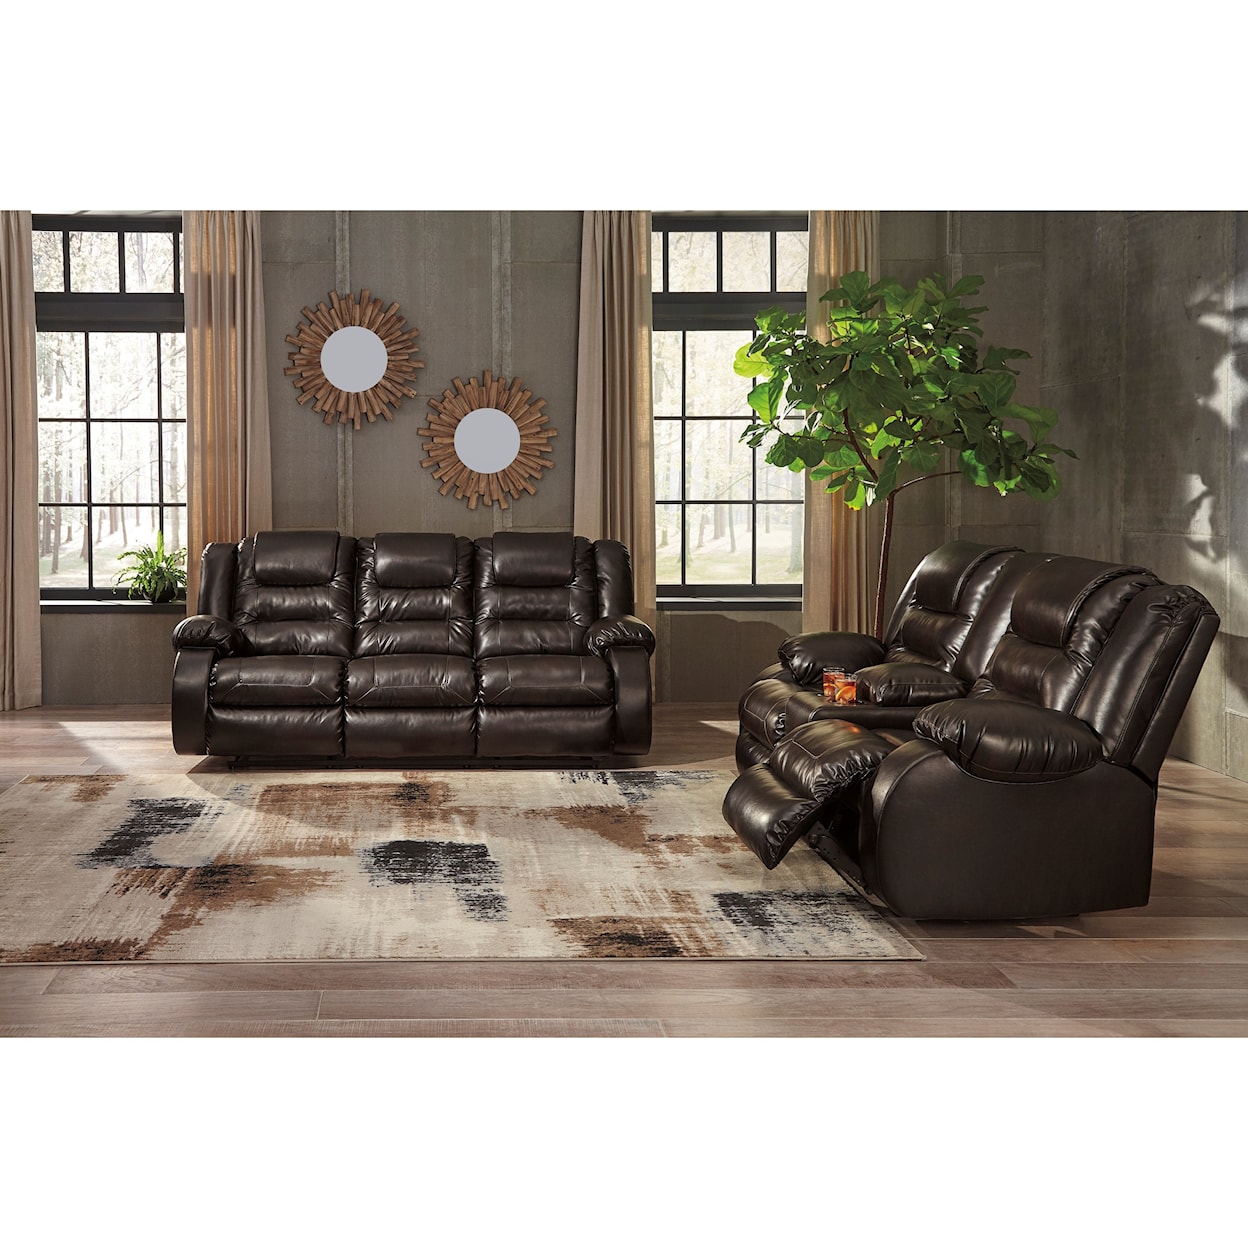 Ashley Furniture Signature Design Vacherie Reclining Living Room Group